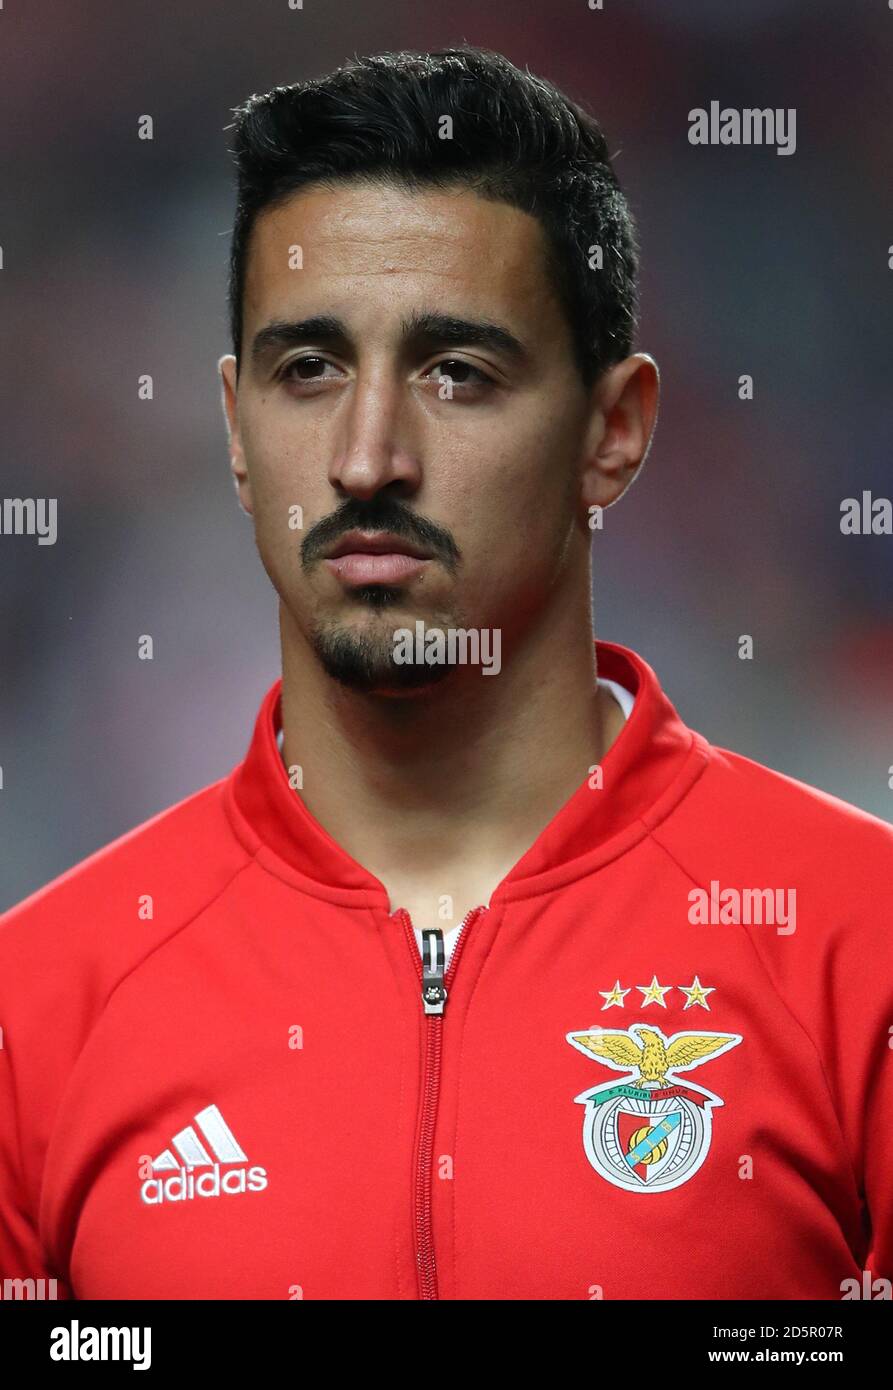 Benfica's Gomes Andre Almeida Stock Photo